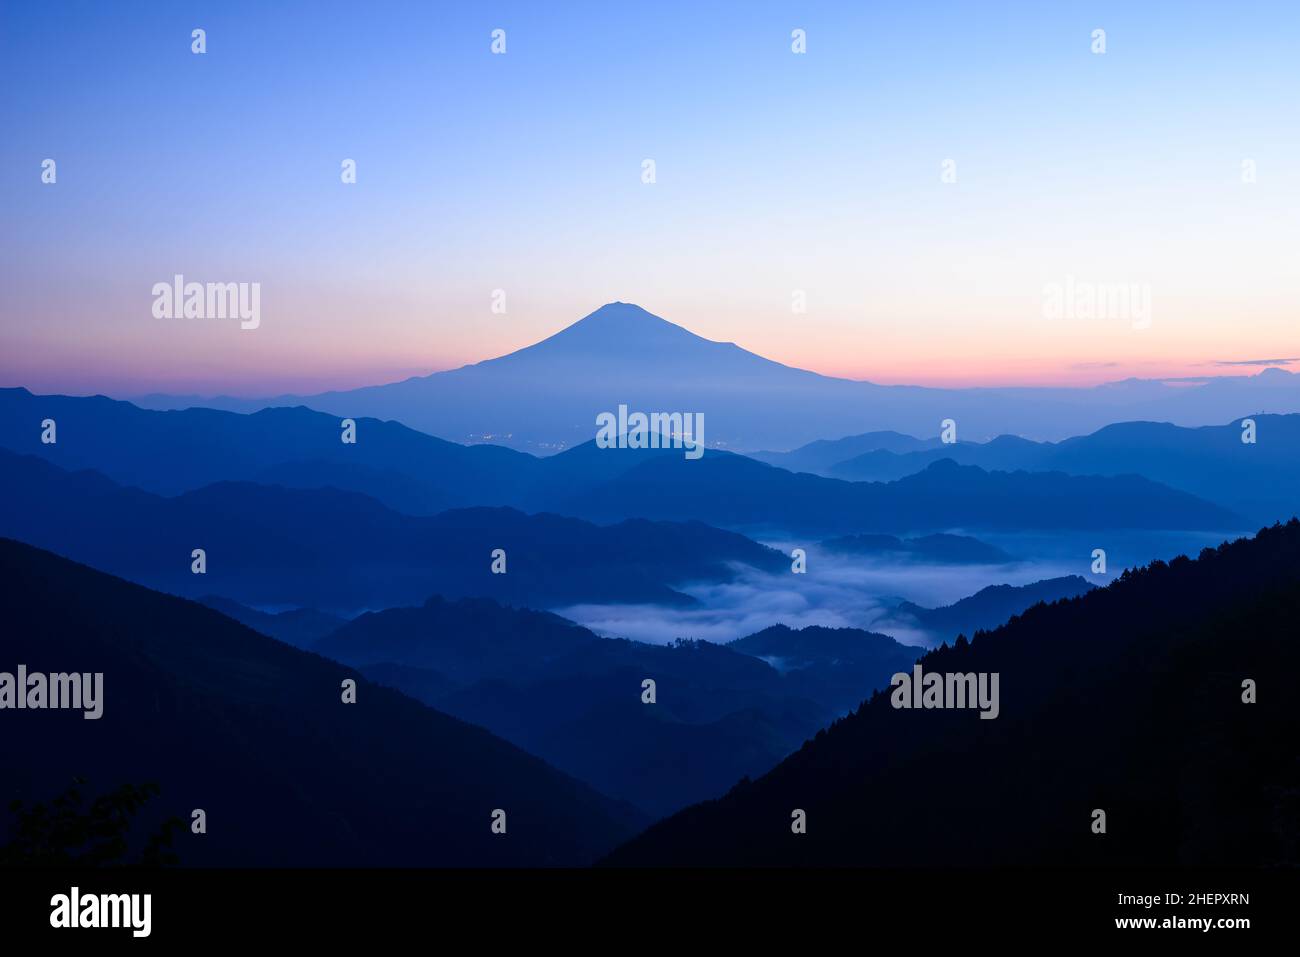 Mount Fuji And The Mountains At Dawn In Shizuoka Prefecture Stock Photo